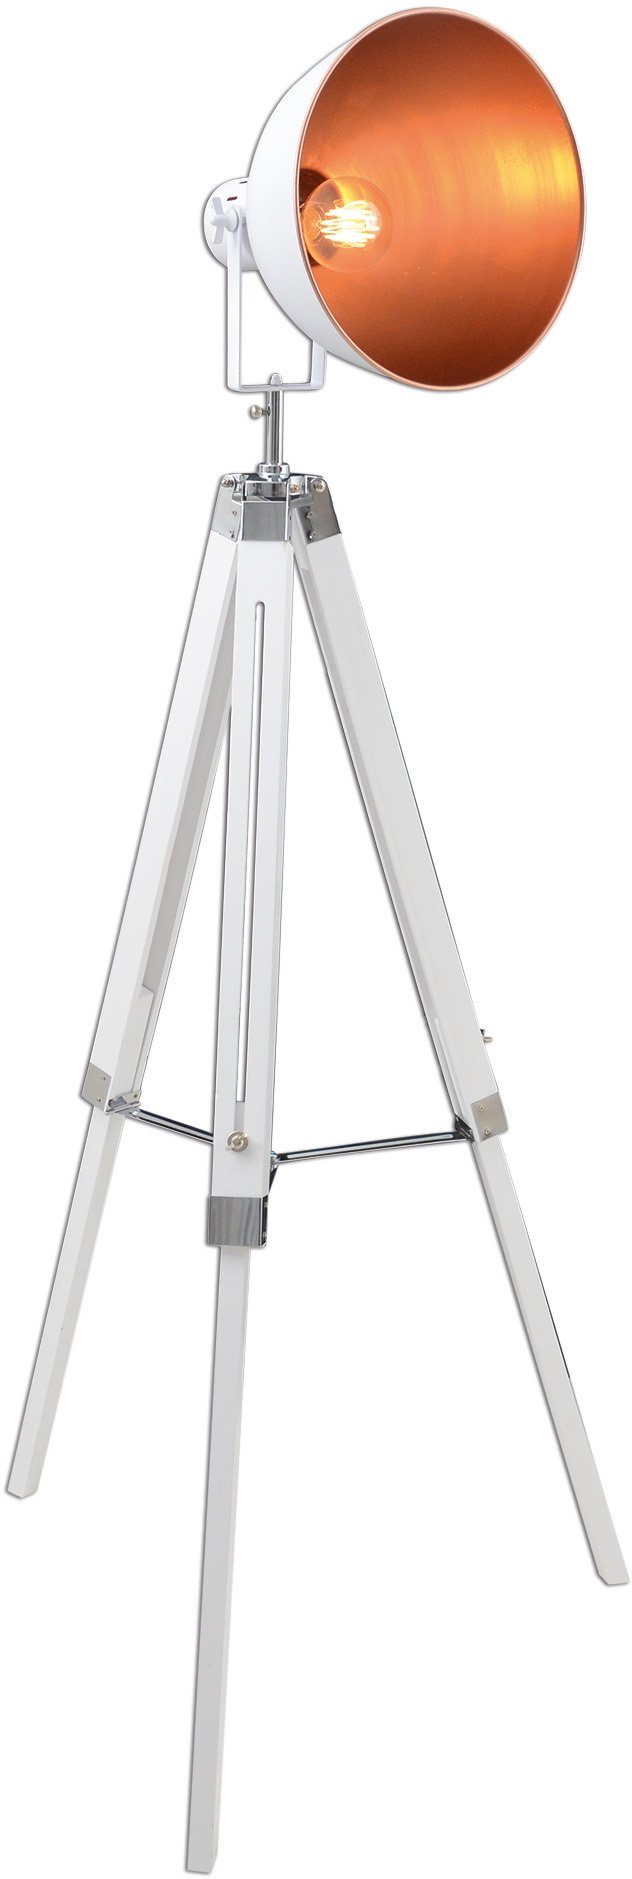 näve Stehlampe Christie, ohne verstellbar: weiß/altweiß Höhe (Kiefernholz), max. 90-130cm Metall/Holz Leuchtmittel, 40W, E27